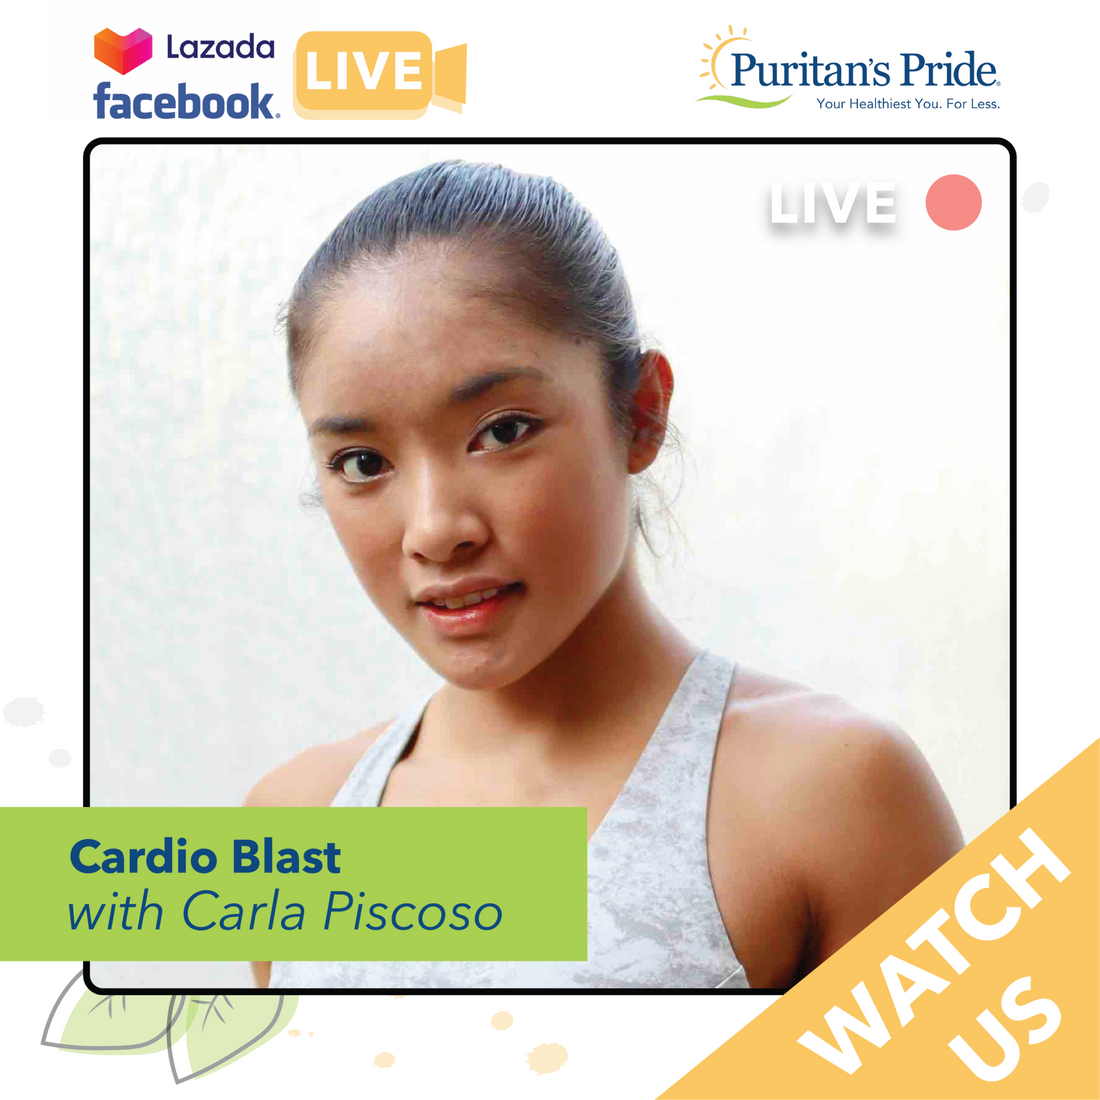 Fitness Friday: Cardio Blast with Carla Piscoso!